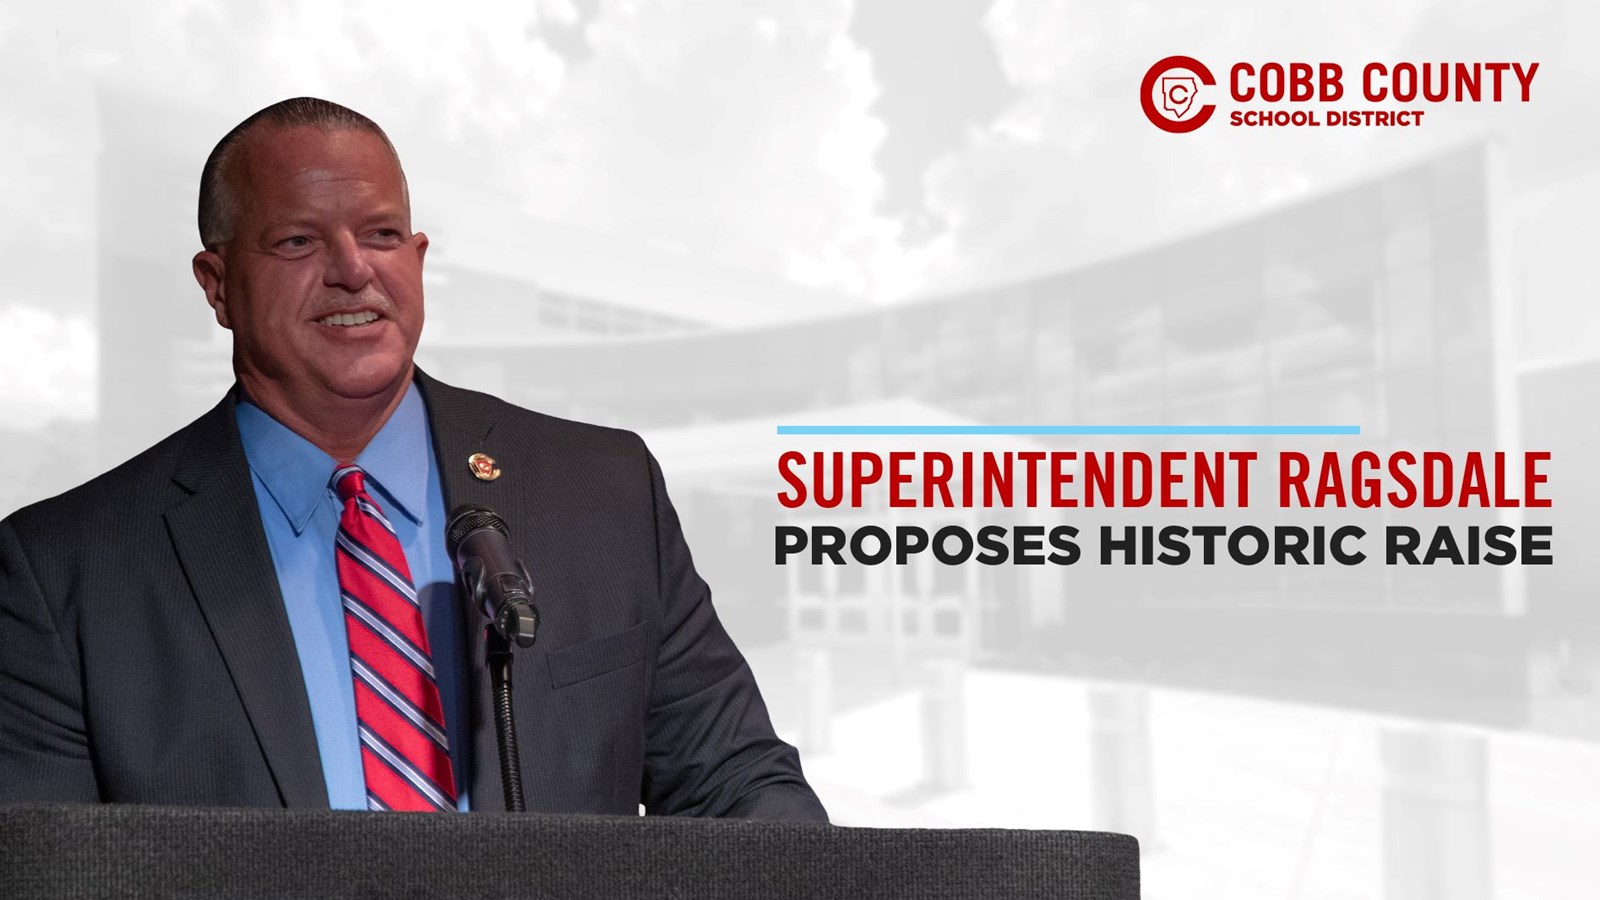 Superintendent Ragsdale Proposes Historic Raise